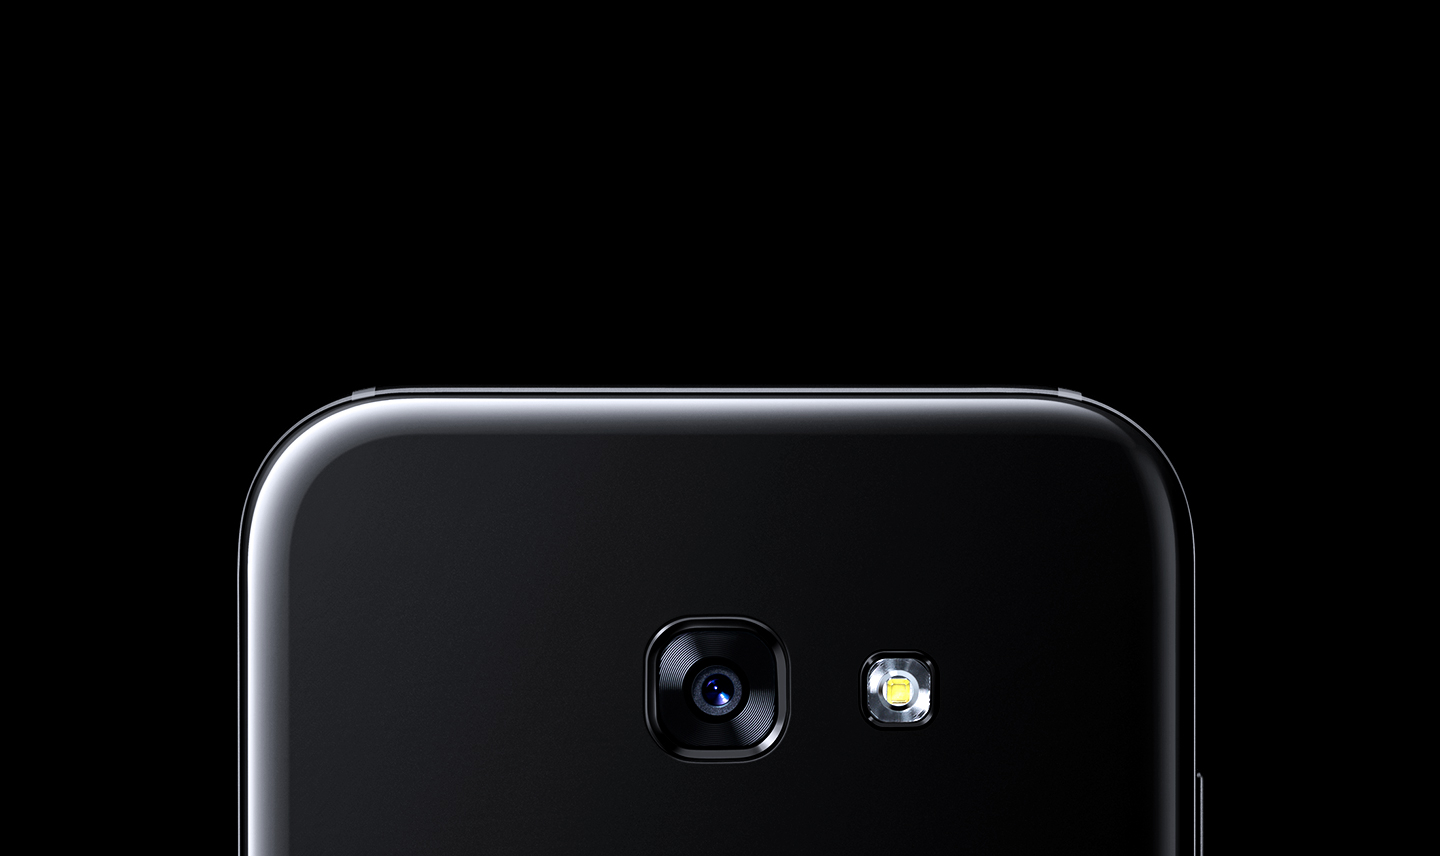 Galaxy A5 (2017) arka kamerasının yakın çekimi.